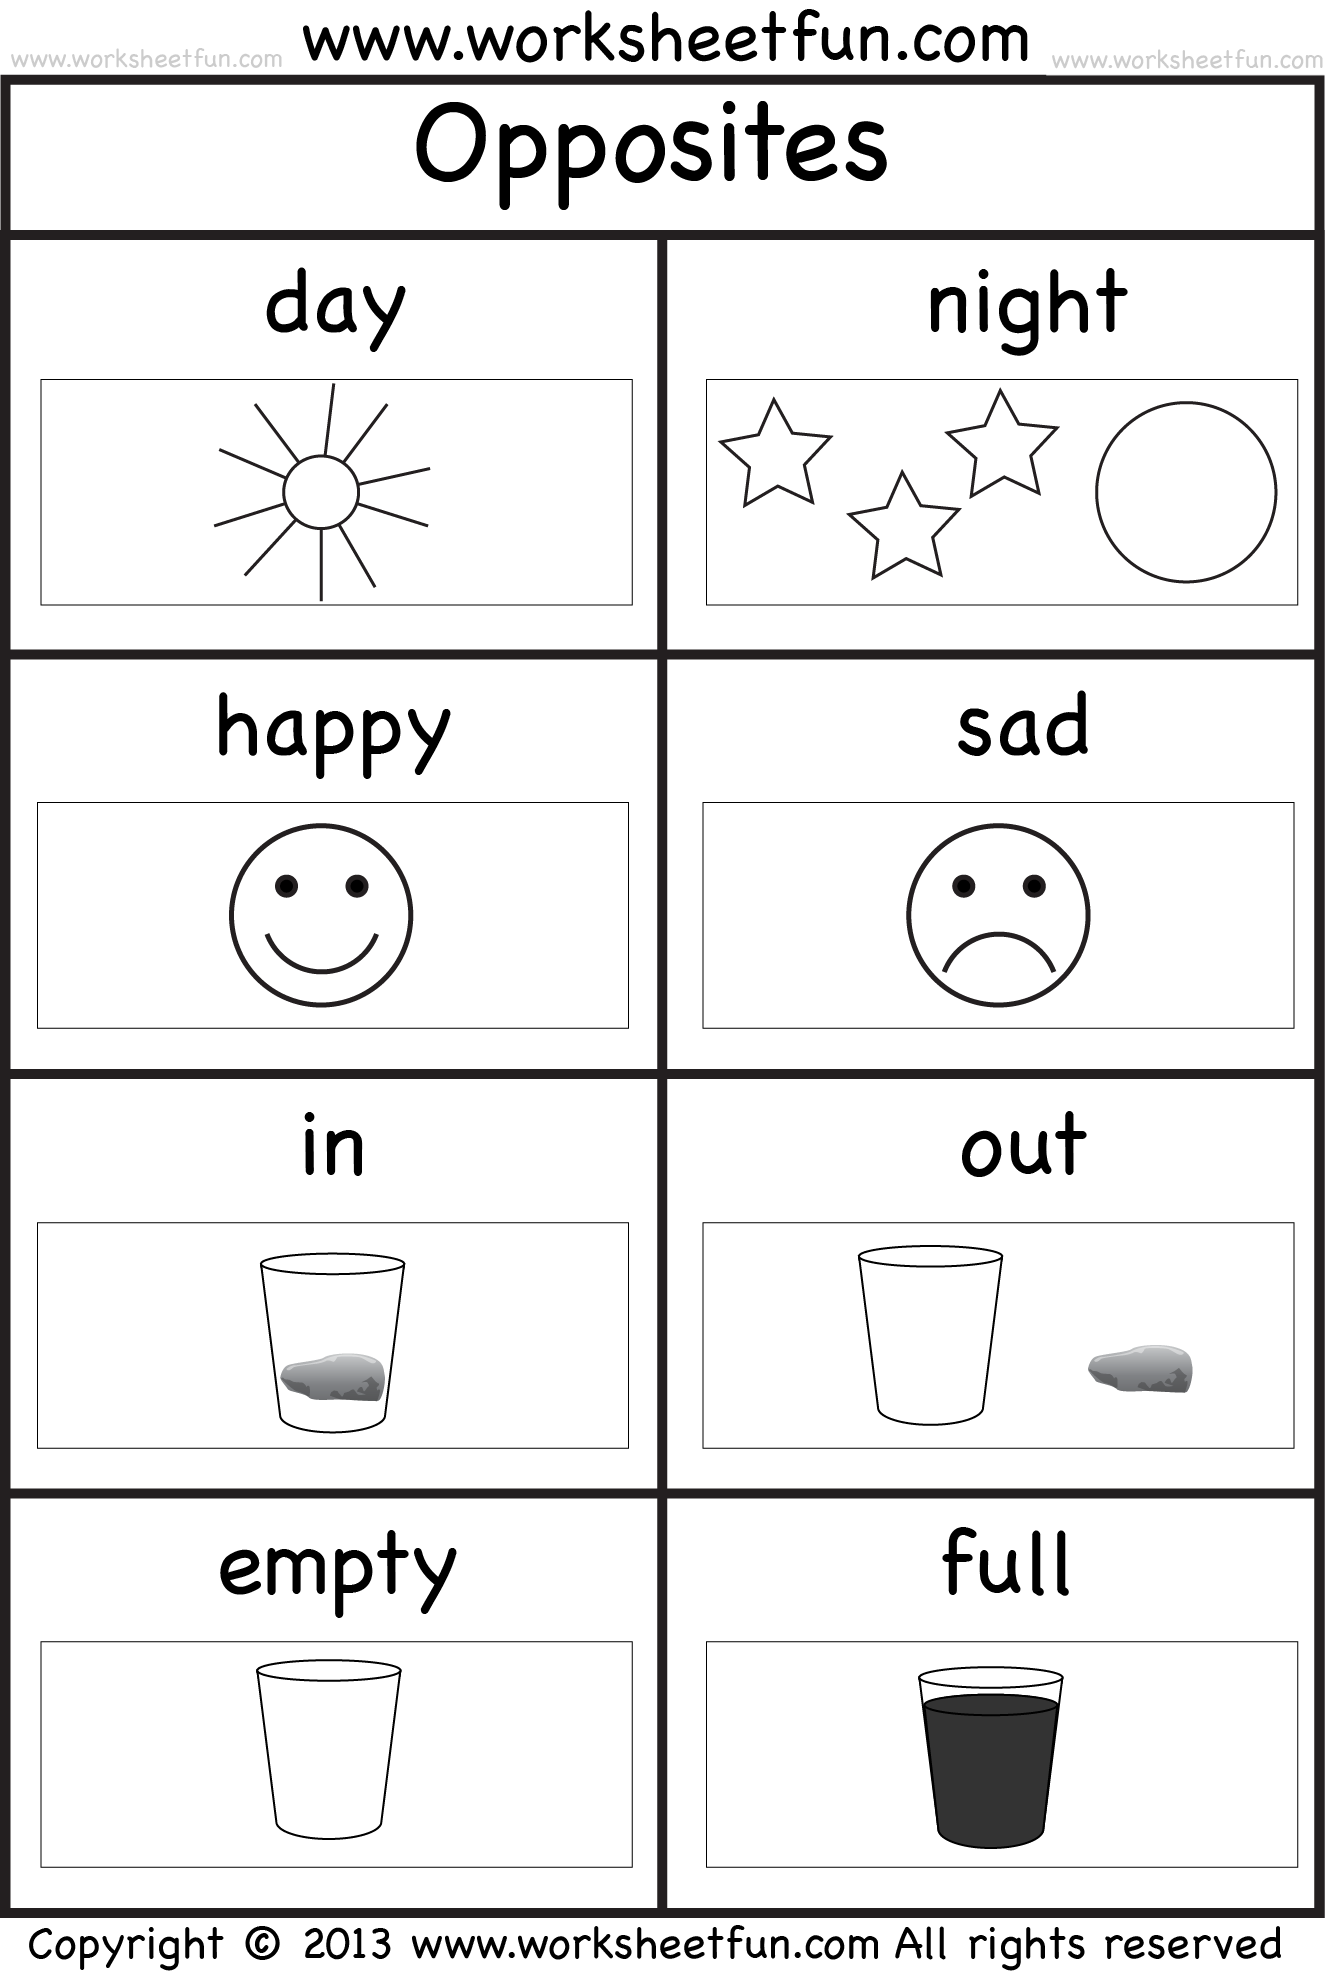 Opposites Worksheet coloring page for preschool kids